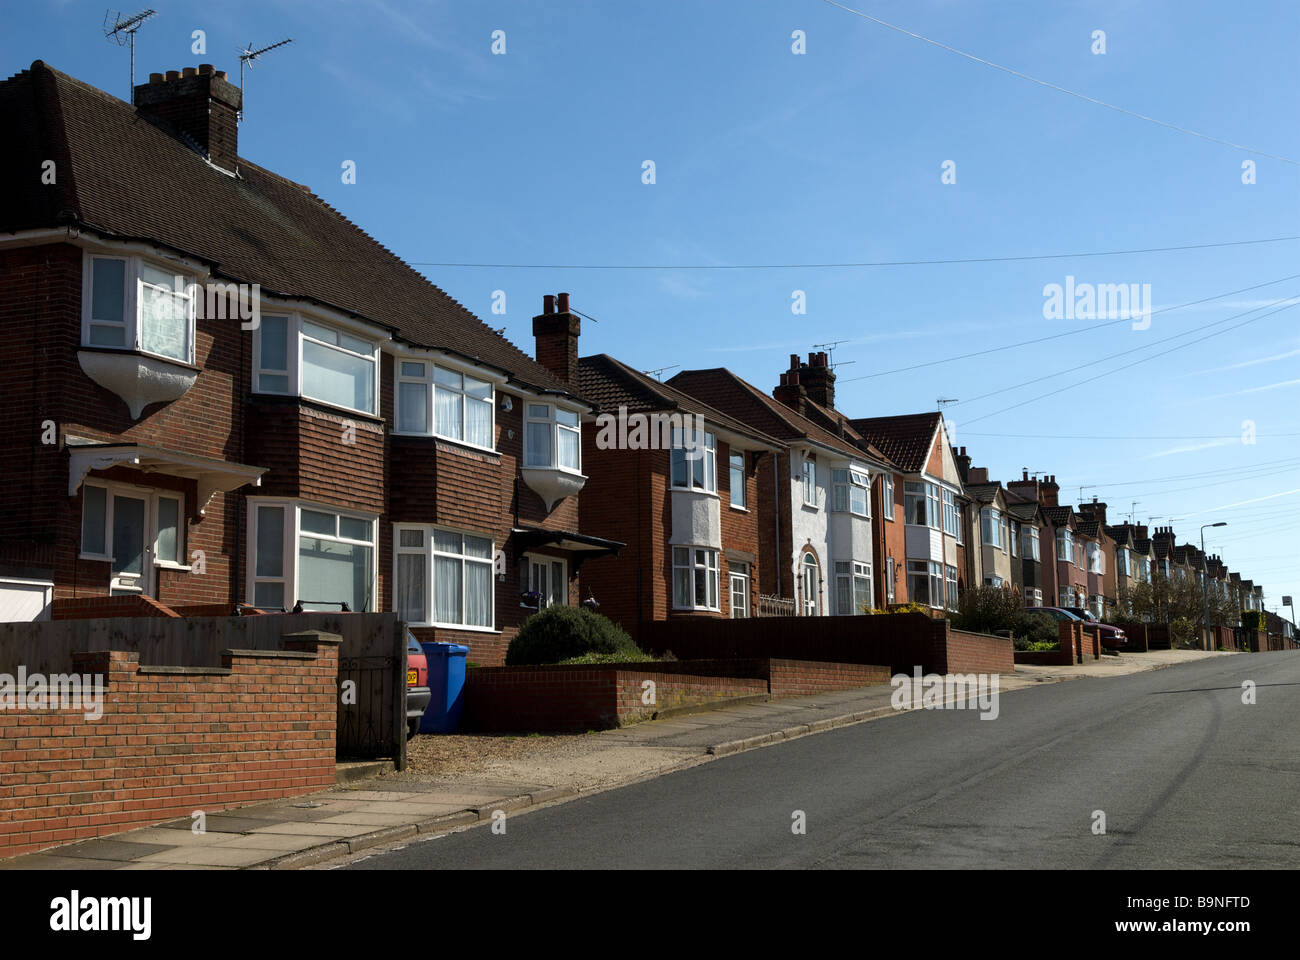 Residential street, Ipswich, Suffolk, UK. Stock Photo